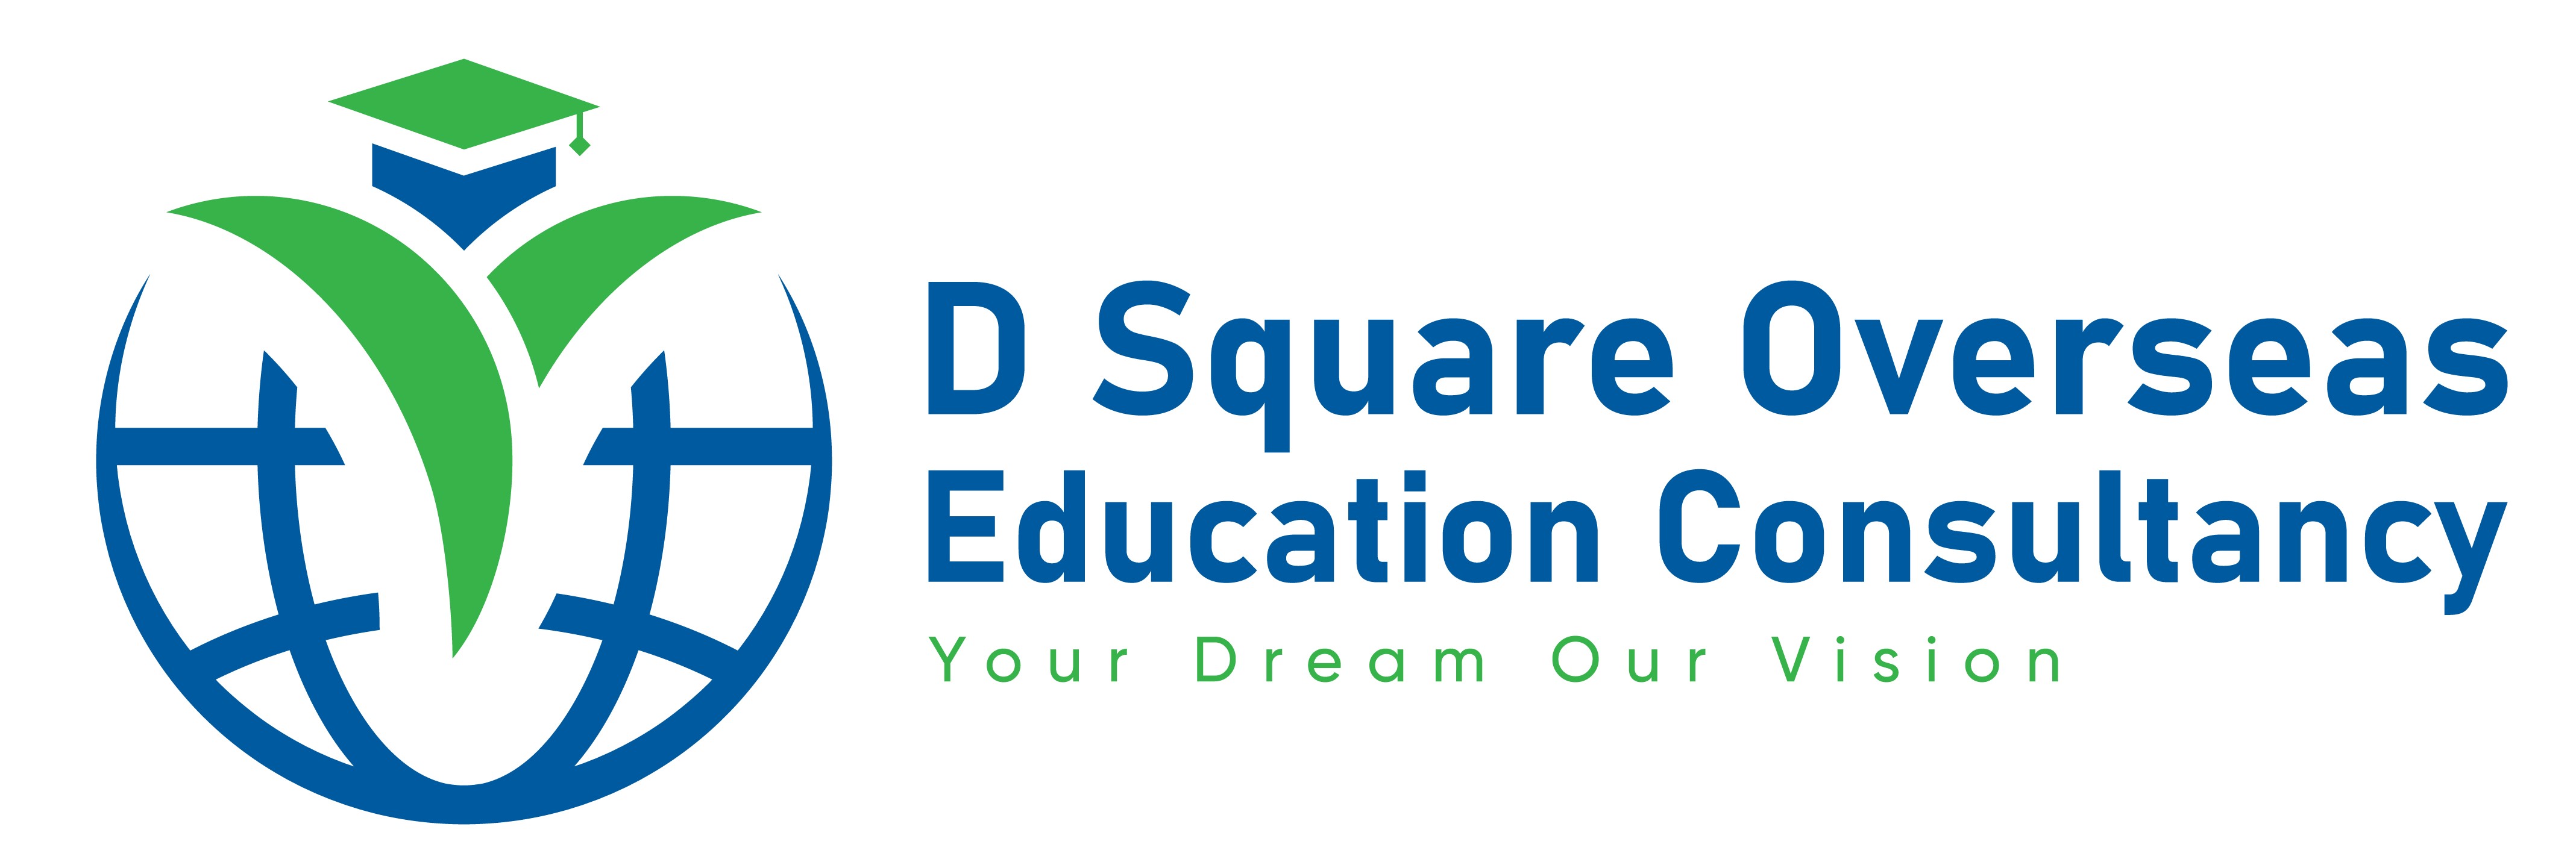 D Square Overseas Education Consultancy